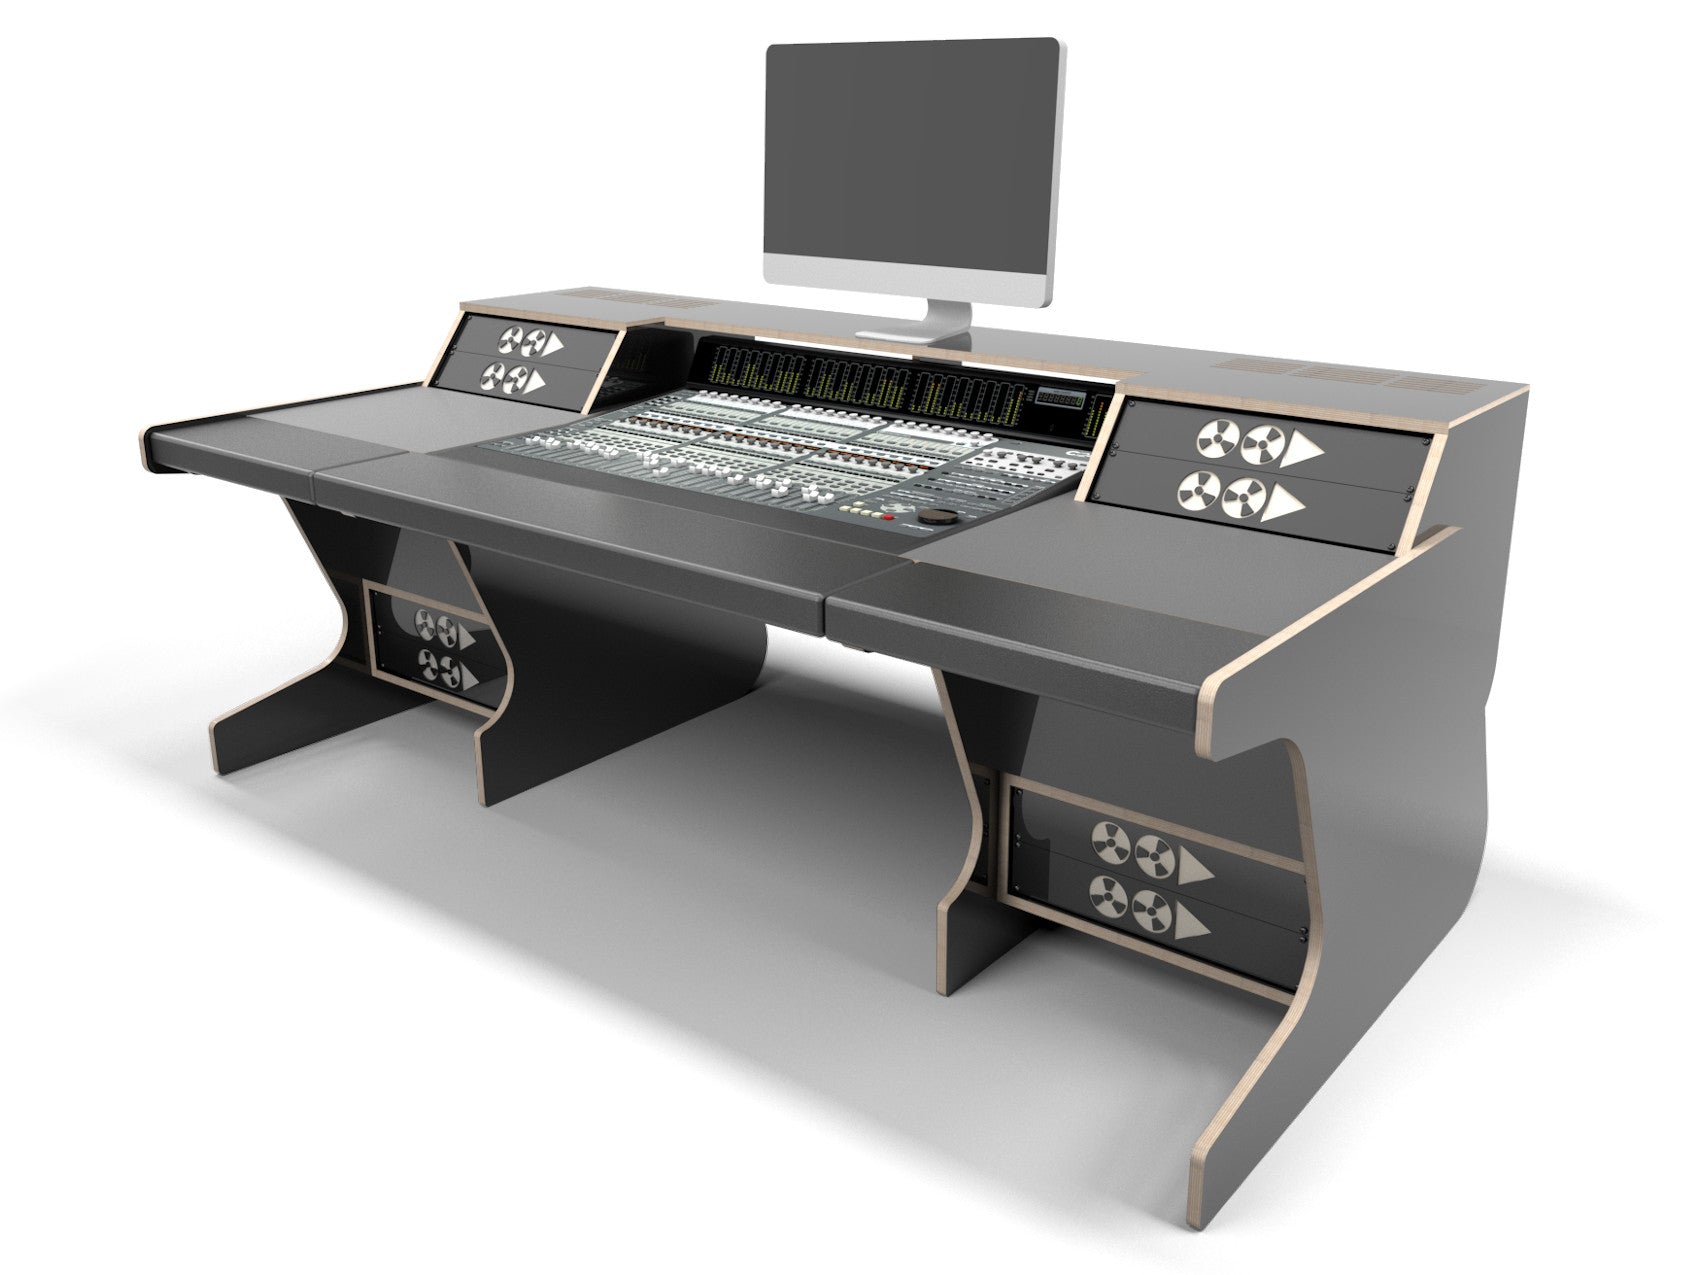 Recording Studio Mixing Desk with Mixer Control Desk Slider Stock